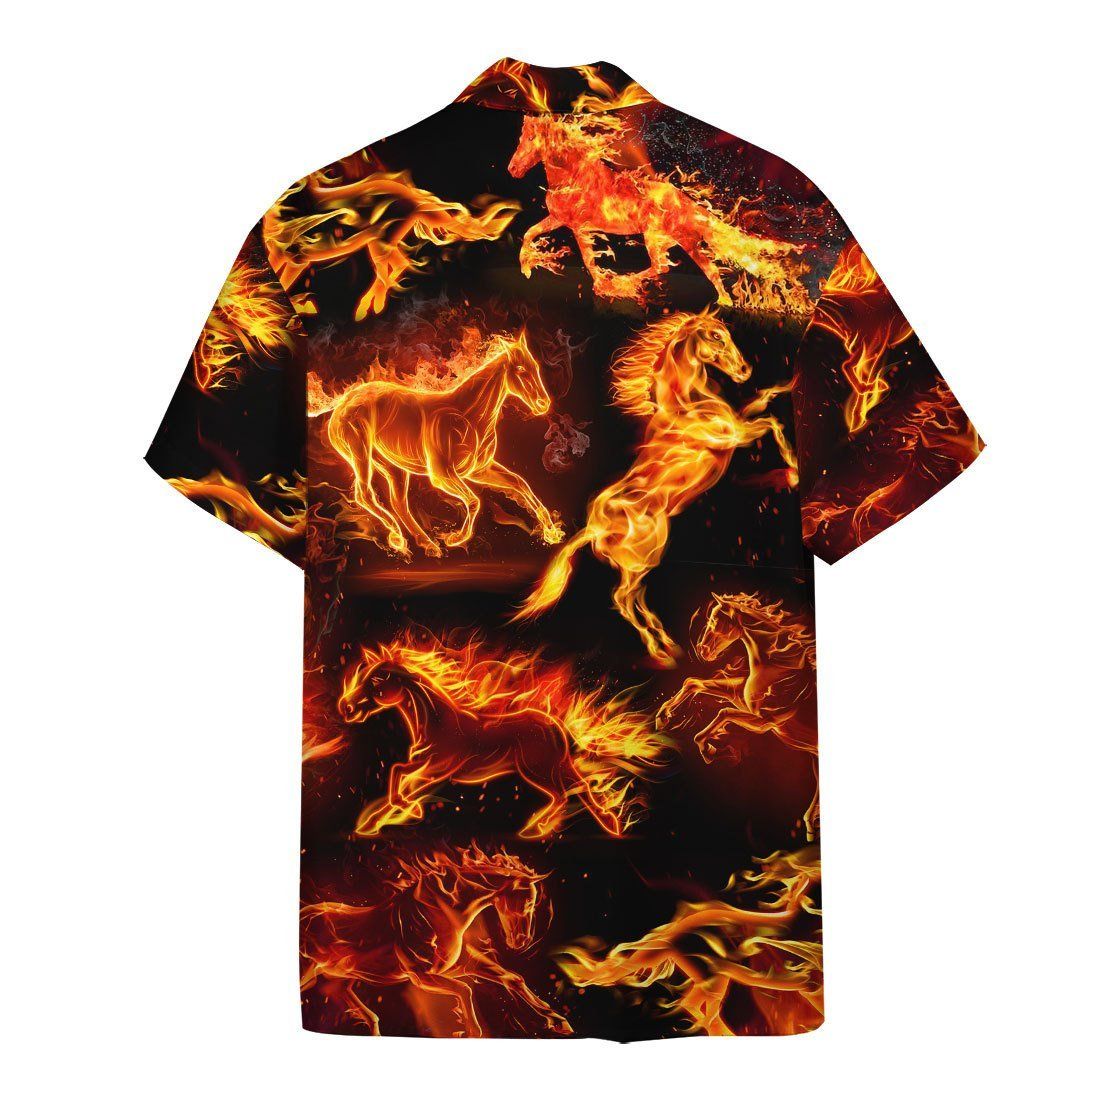 Gearhuman 3D Fire Horse Hawaii Shirt ZZ2605217 Hawai Shirt 